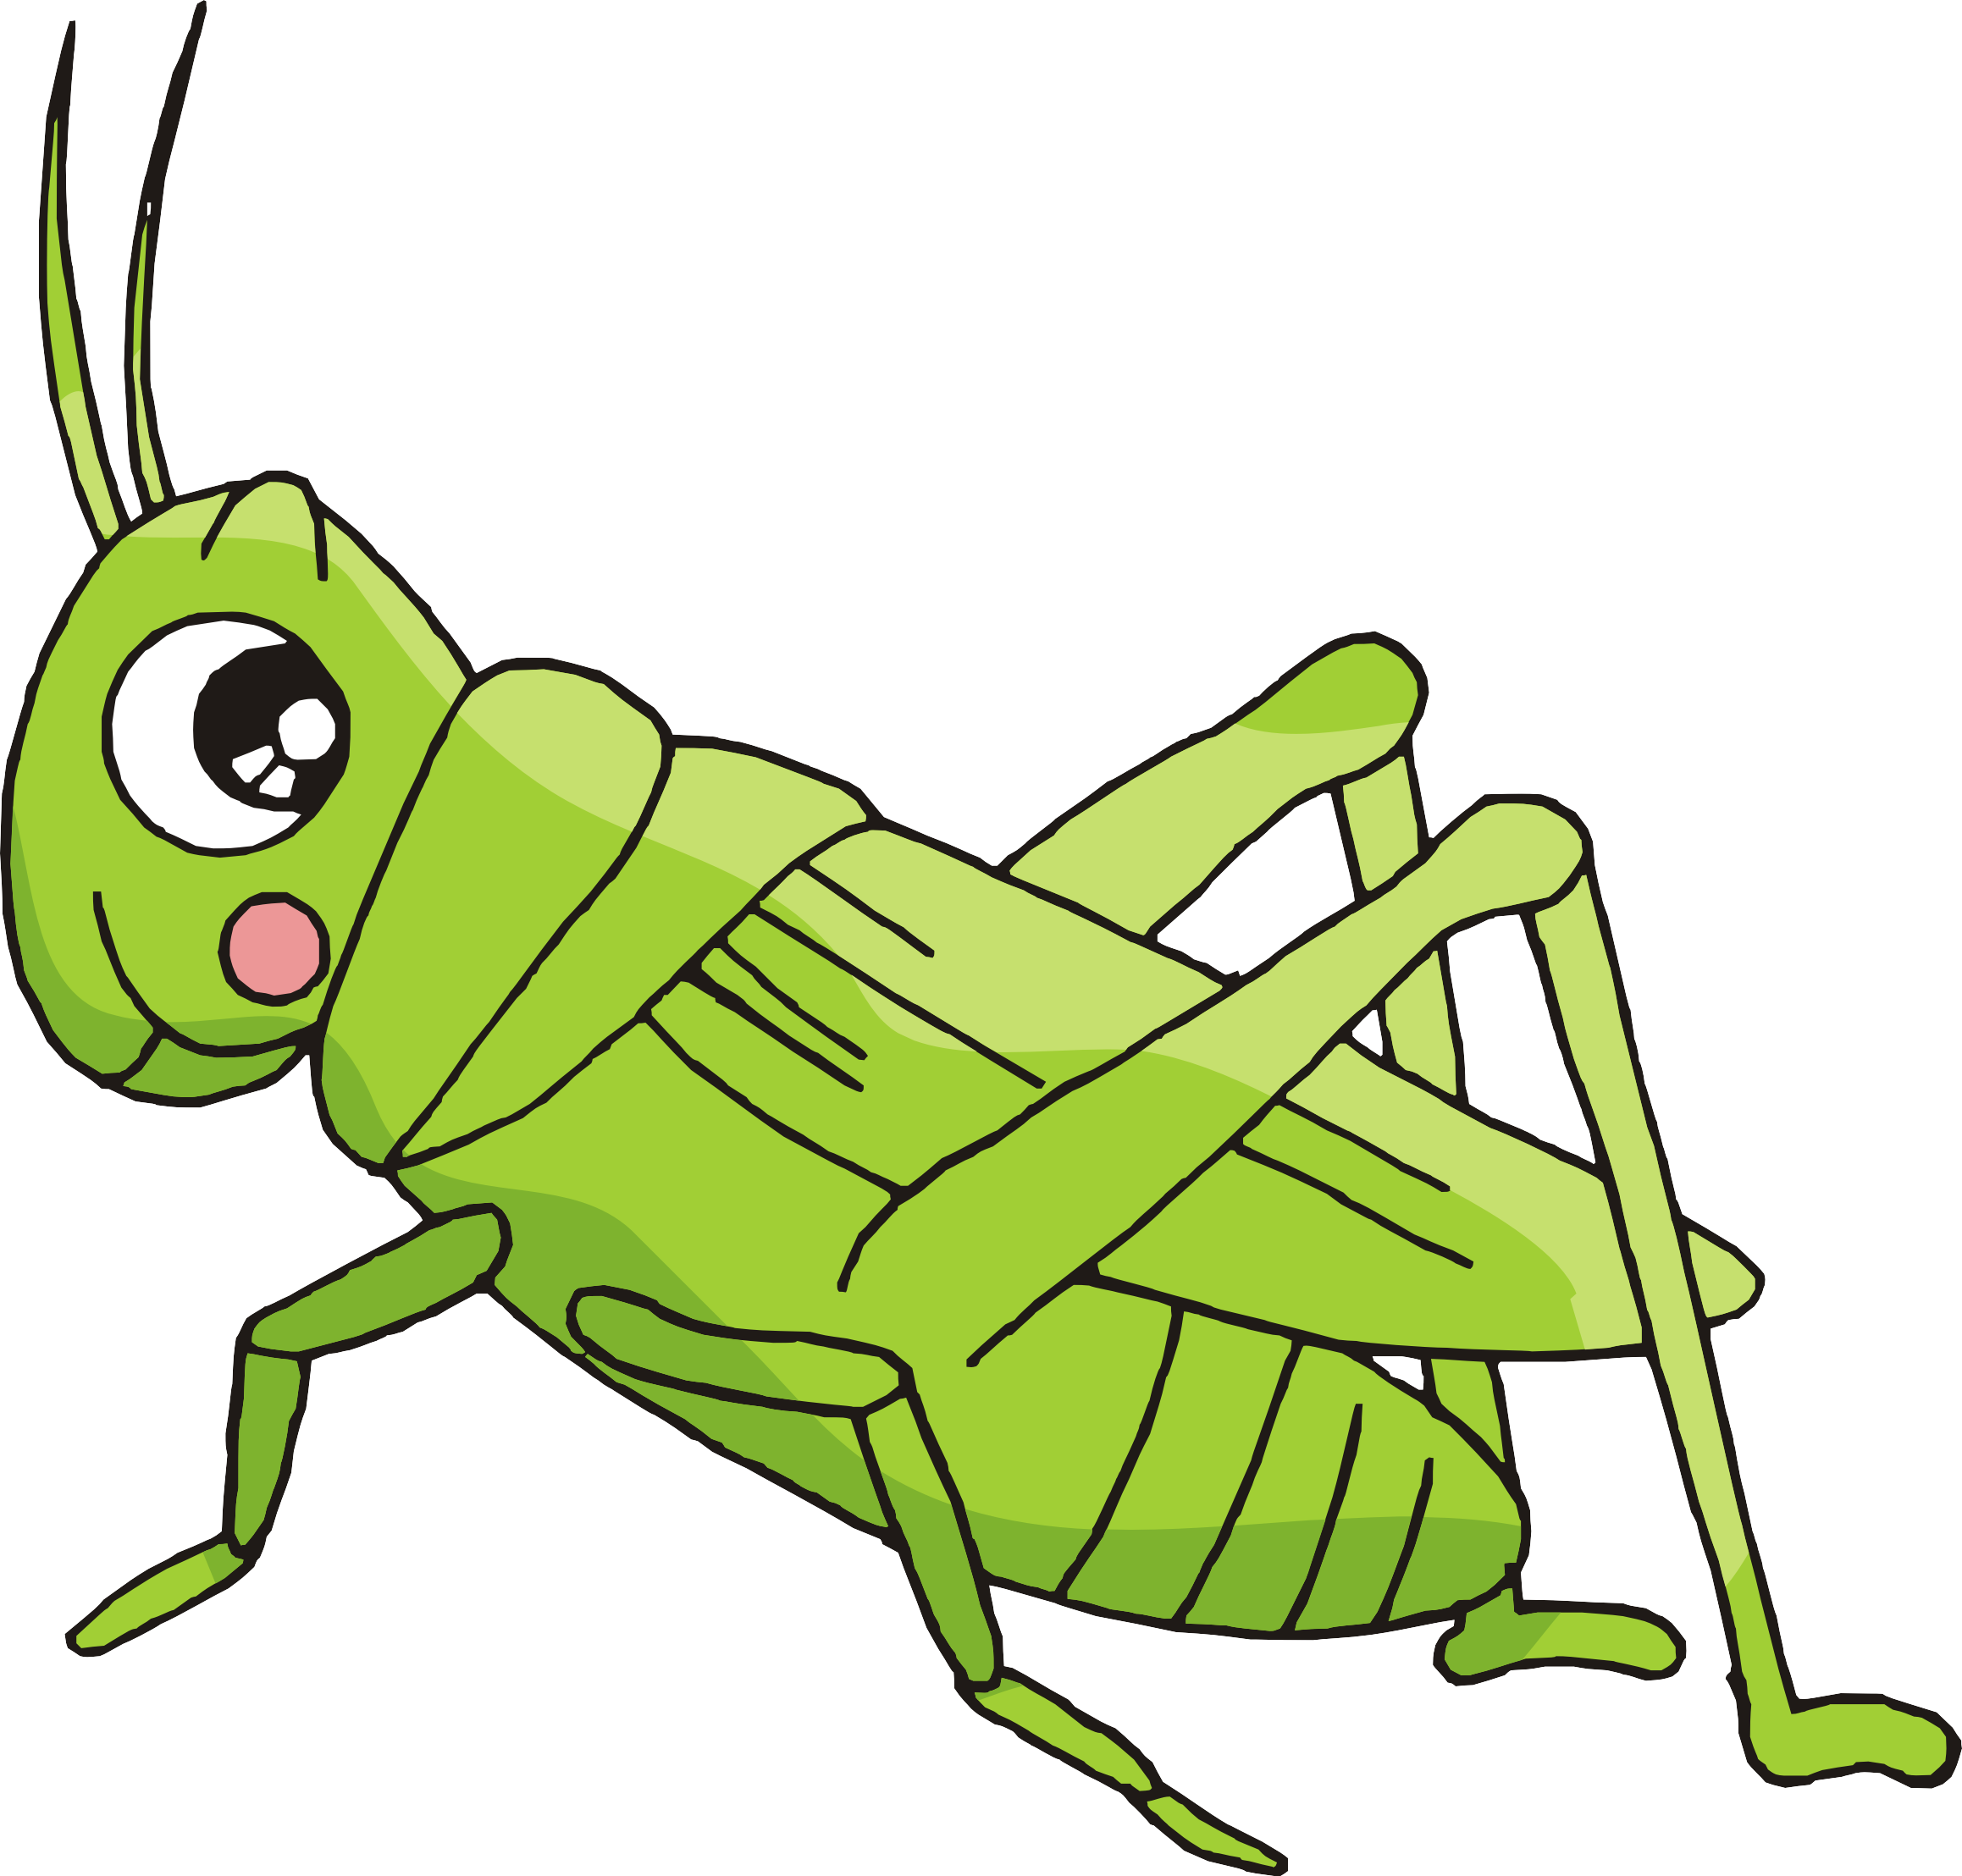 Cartoon bush crickets creative. Insect clipart insect grasshopper